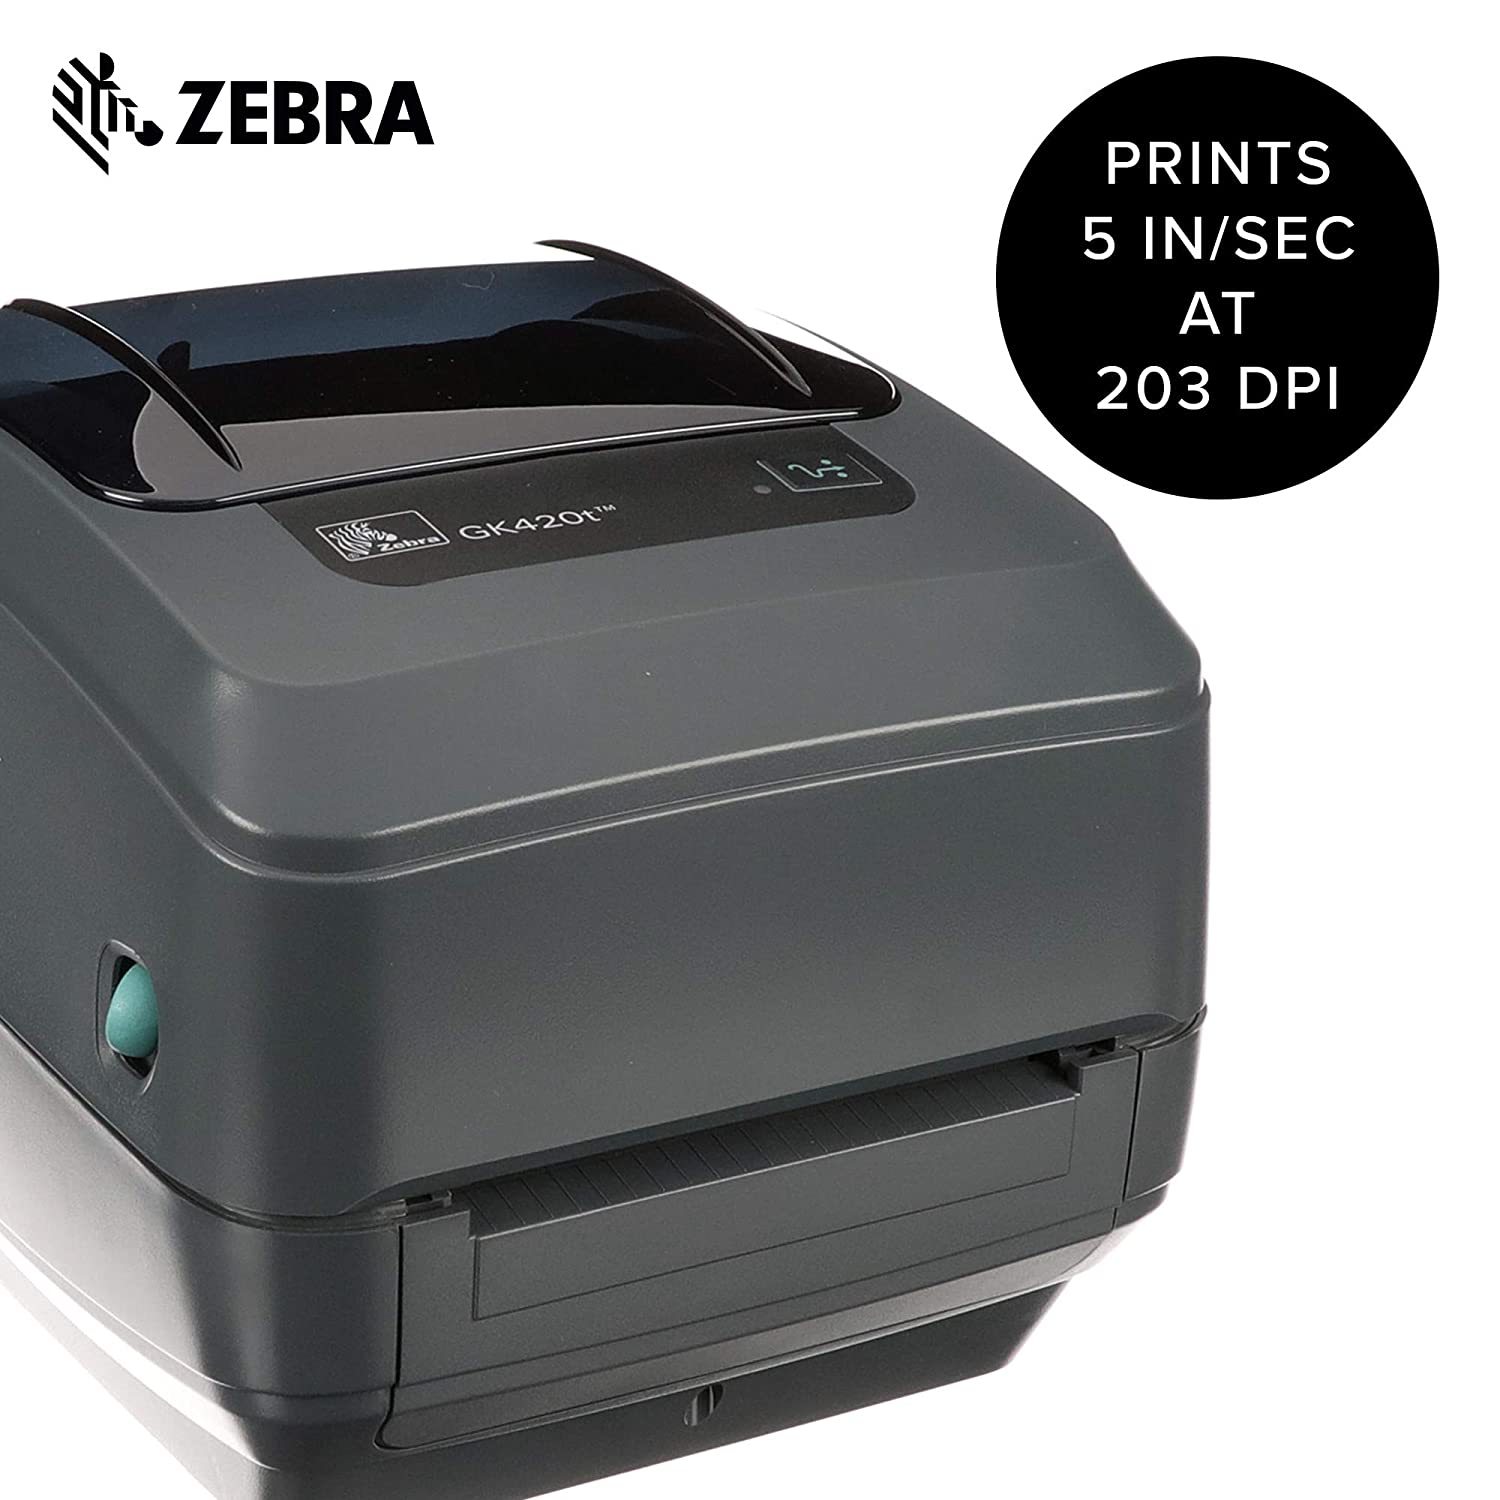 Zebra G Series Gk420t Thermal Monochrome Label Printer Gk42 102510 000 Printers 1957